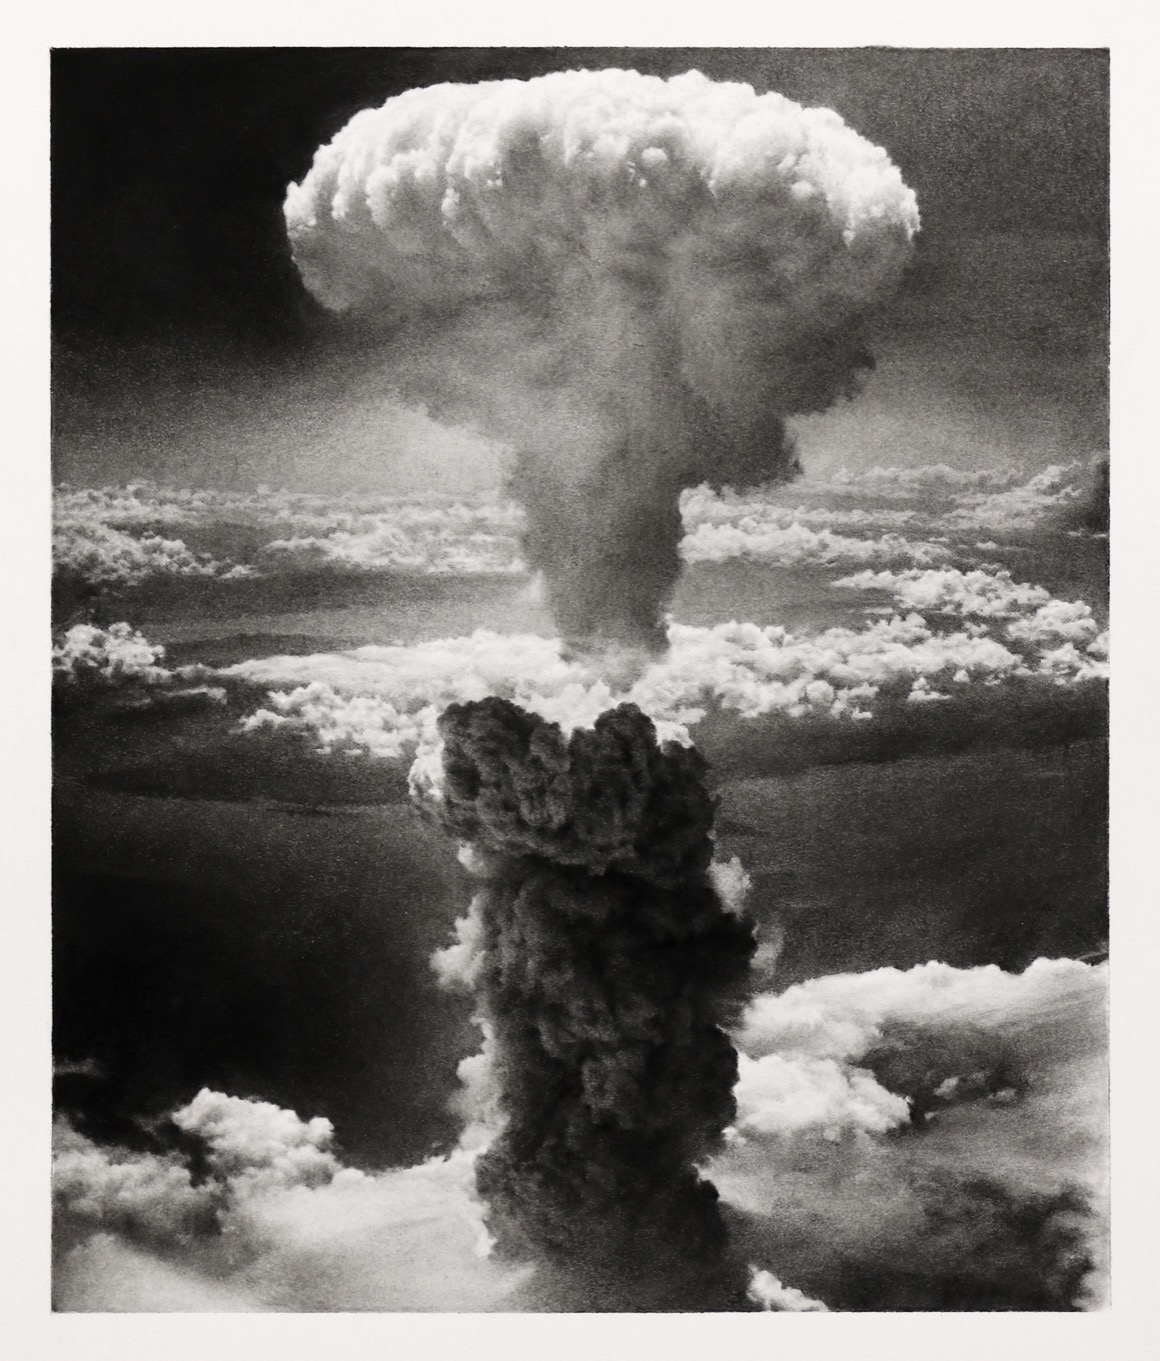 Robert Longo, "Untitled (Nagasaki Bomb, 1945)", 2022